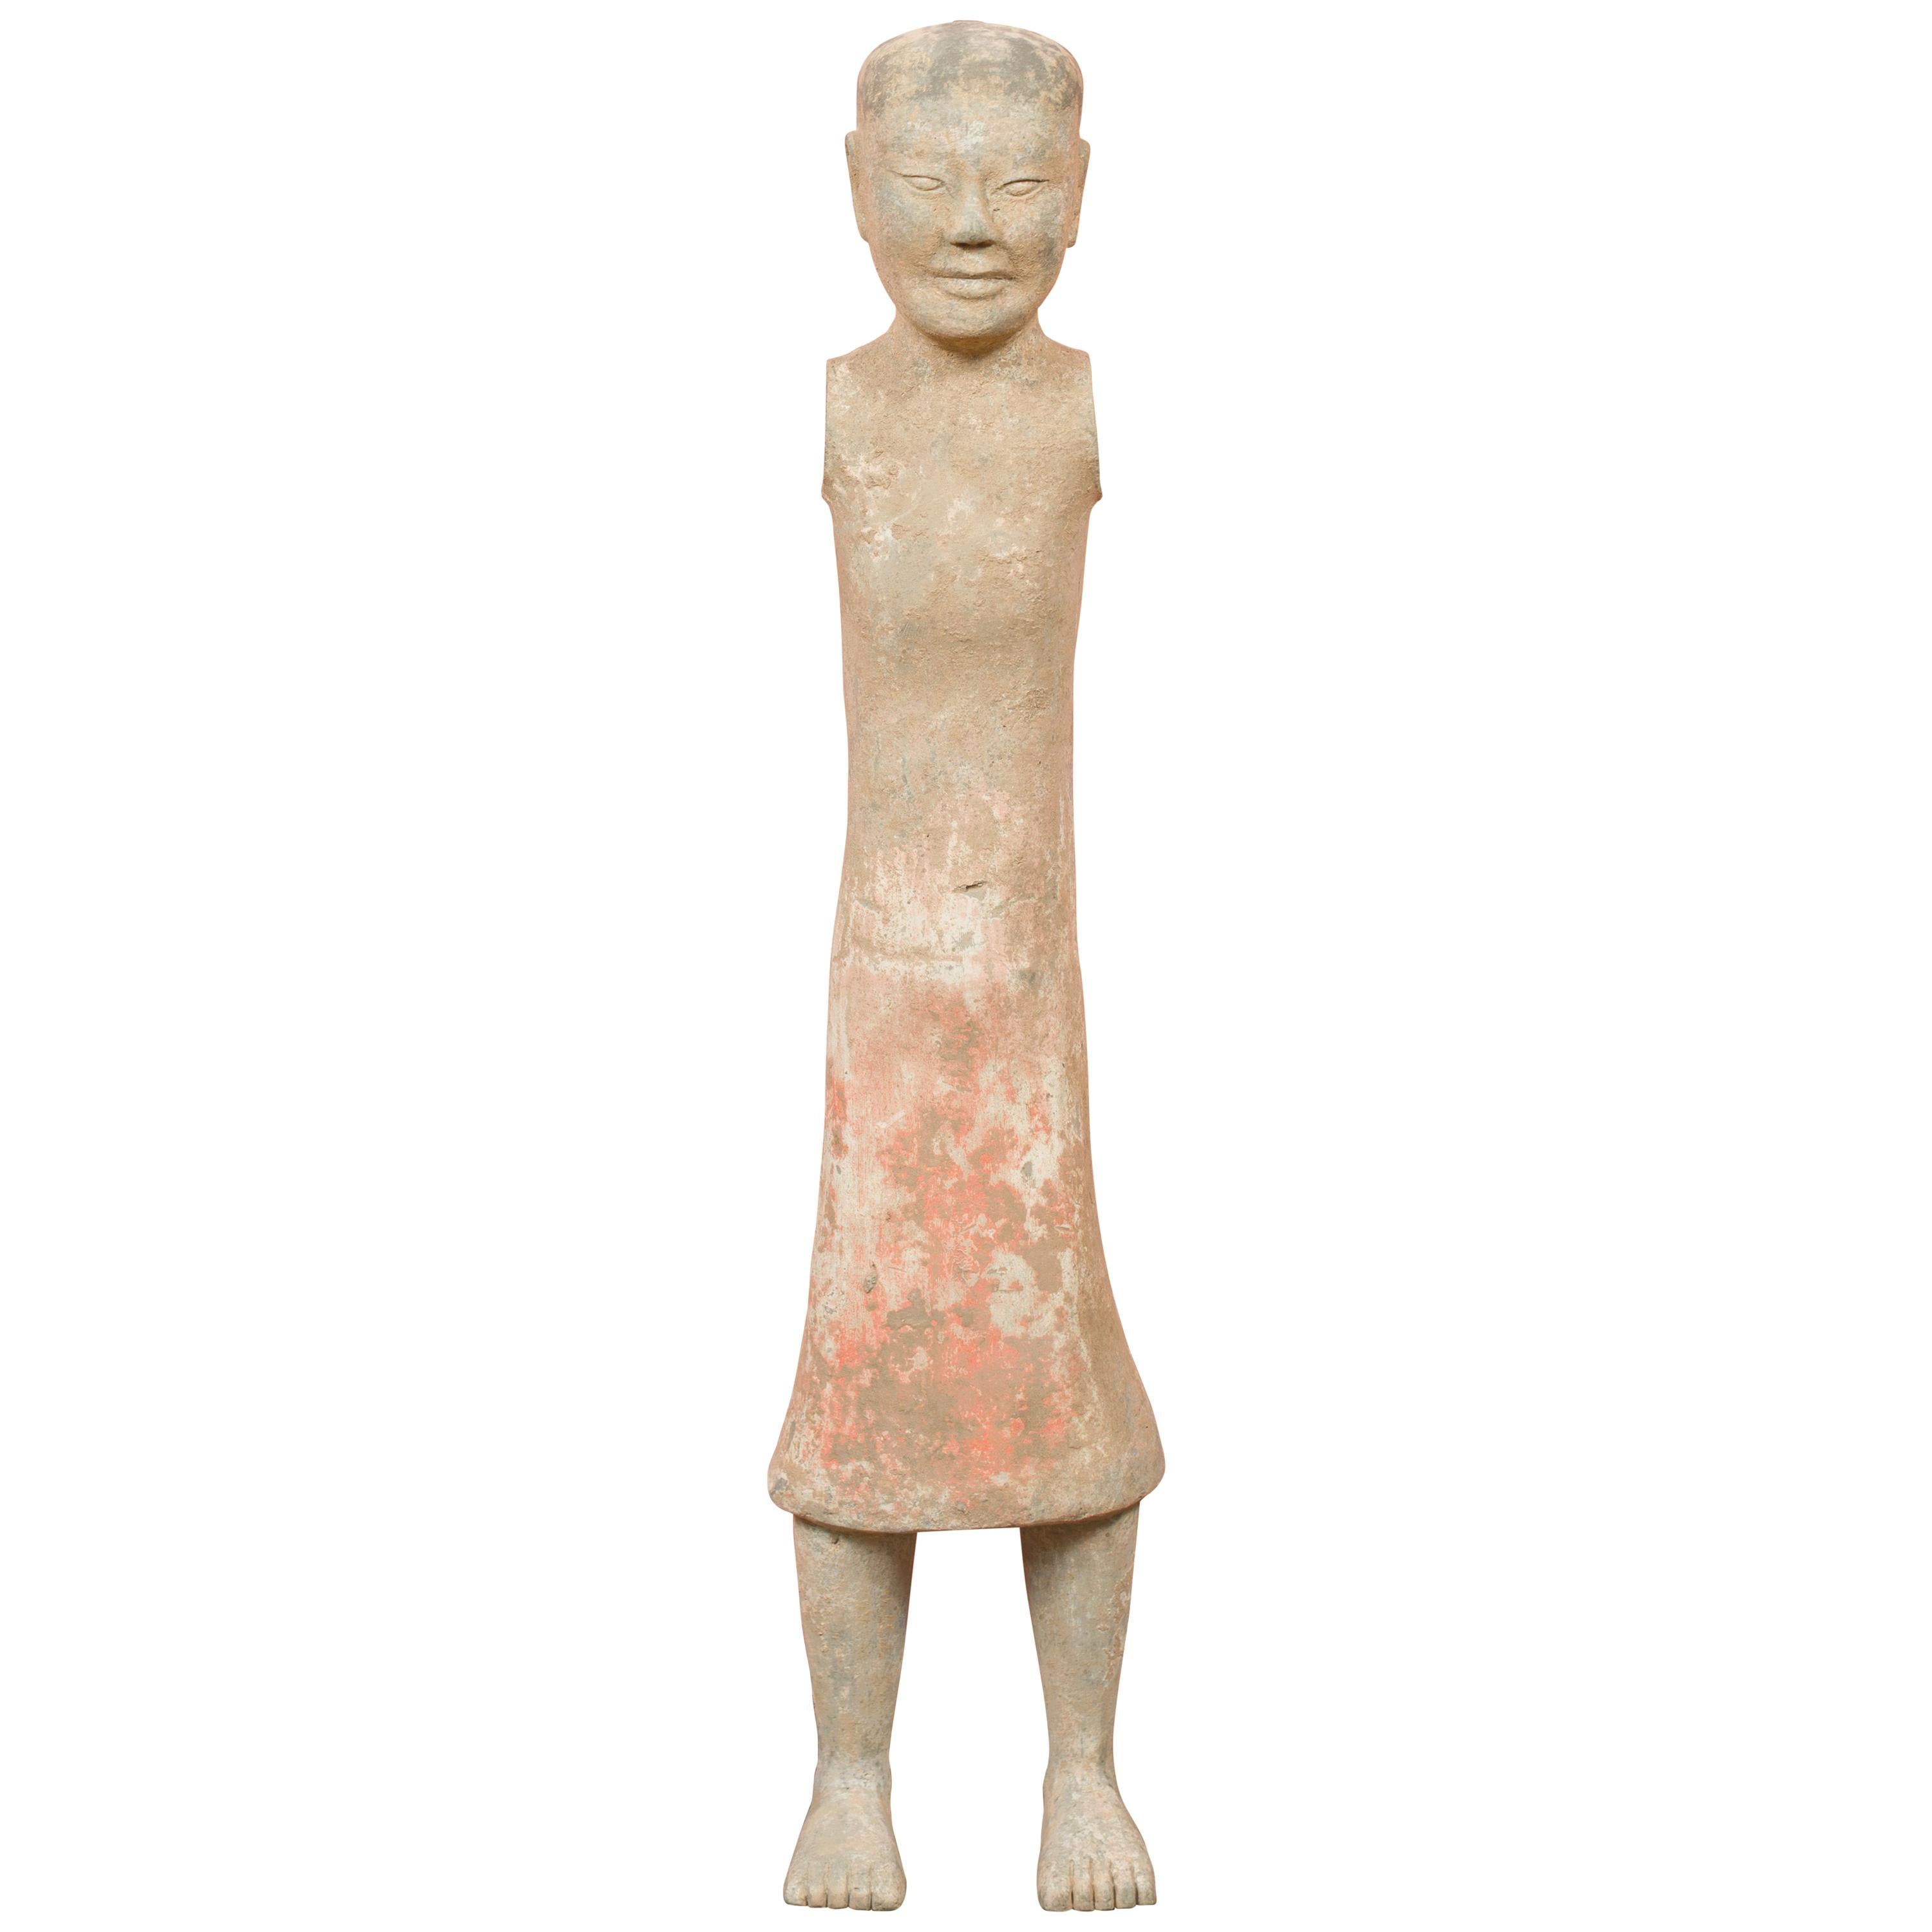 Western Han Dynasty 206 BC-24 AD Chinese Figurine with Original Polychromy